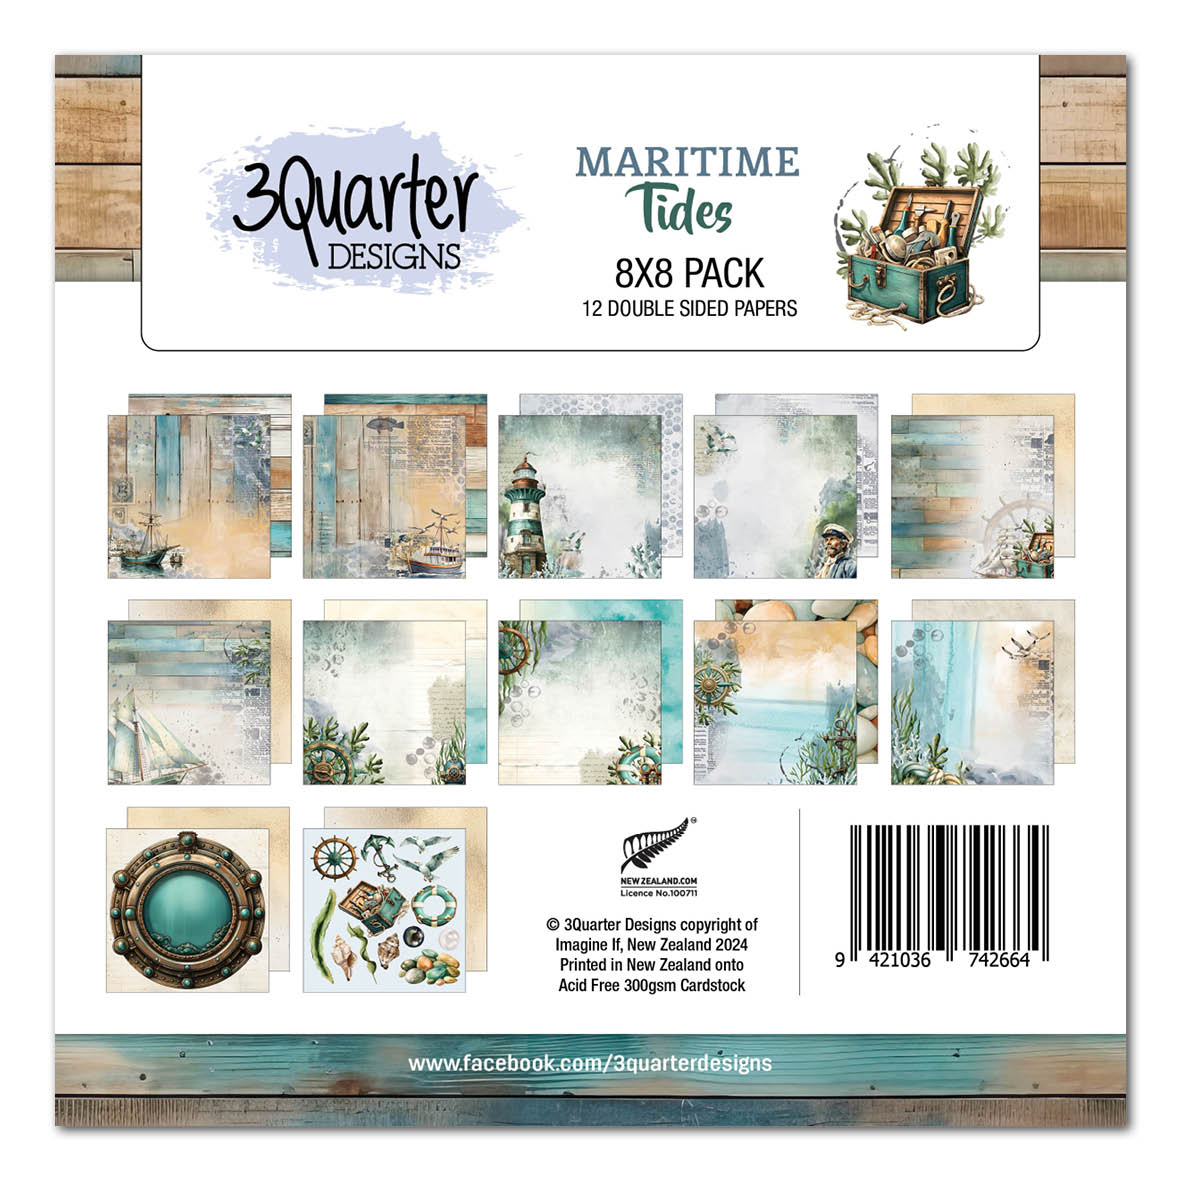 3Quarter Designs Maritime Tides 8x8 Paper Pack